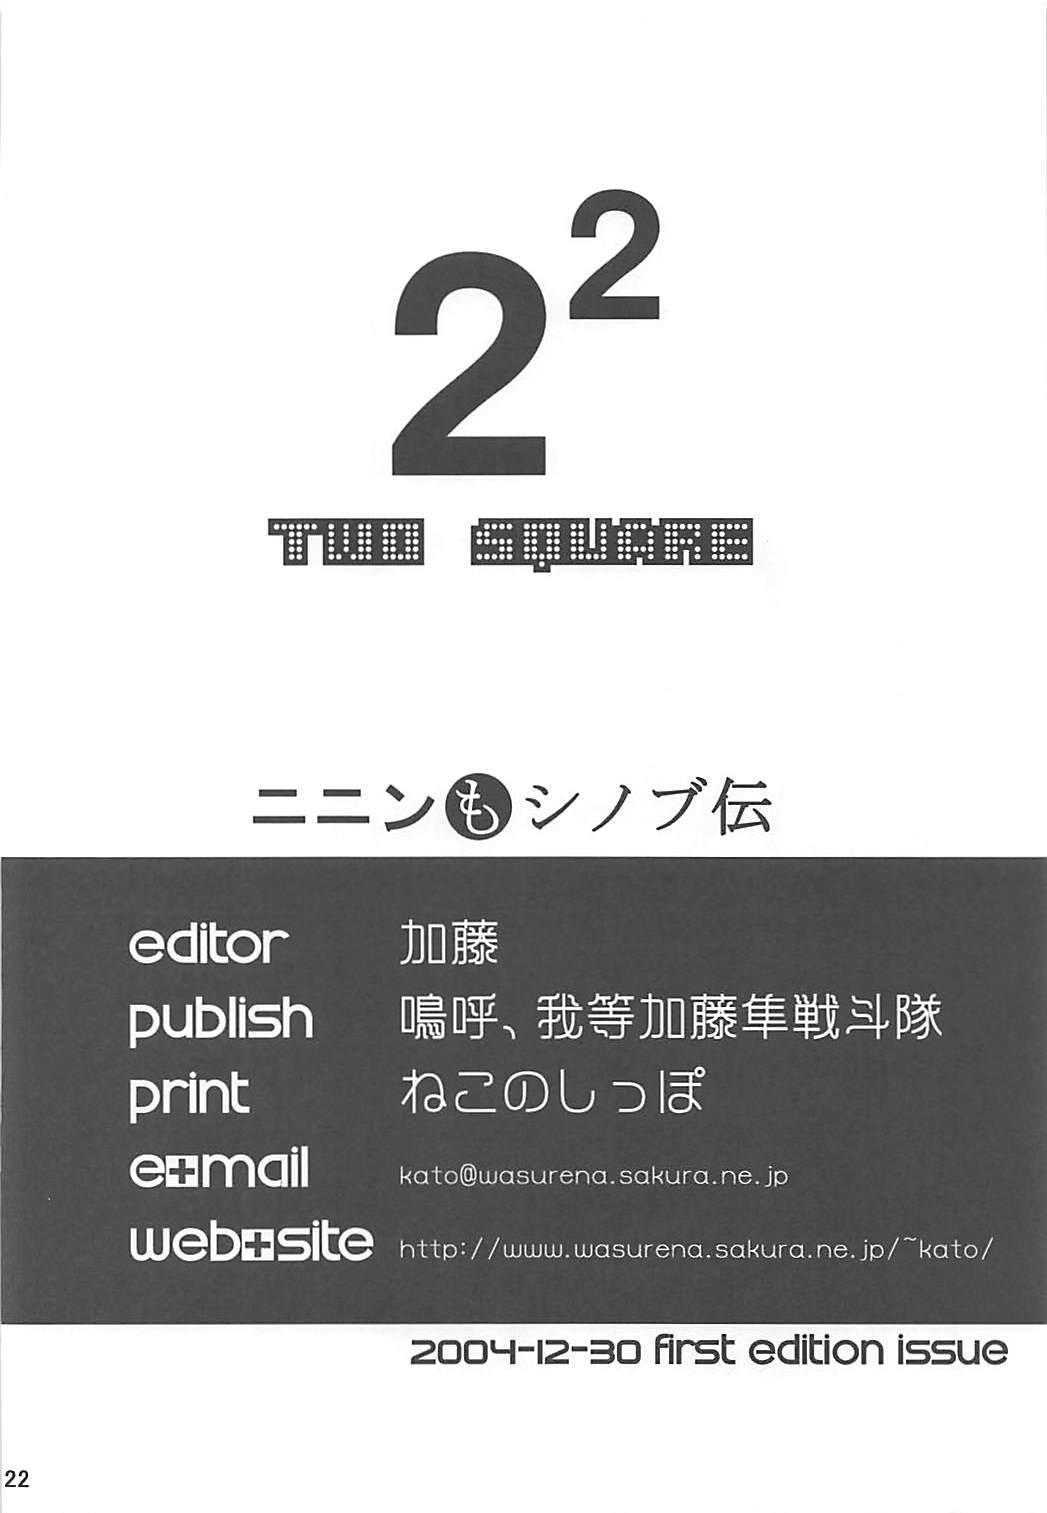 Shavedpussy 2²=Shinobuden - 2x2 shinobuden Indoor - Page 21